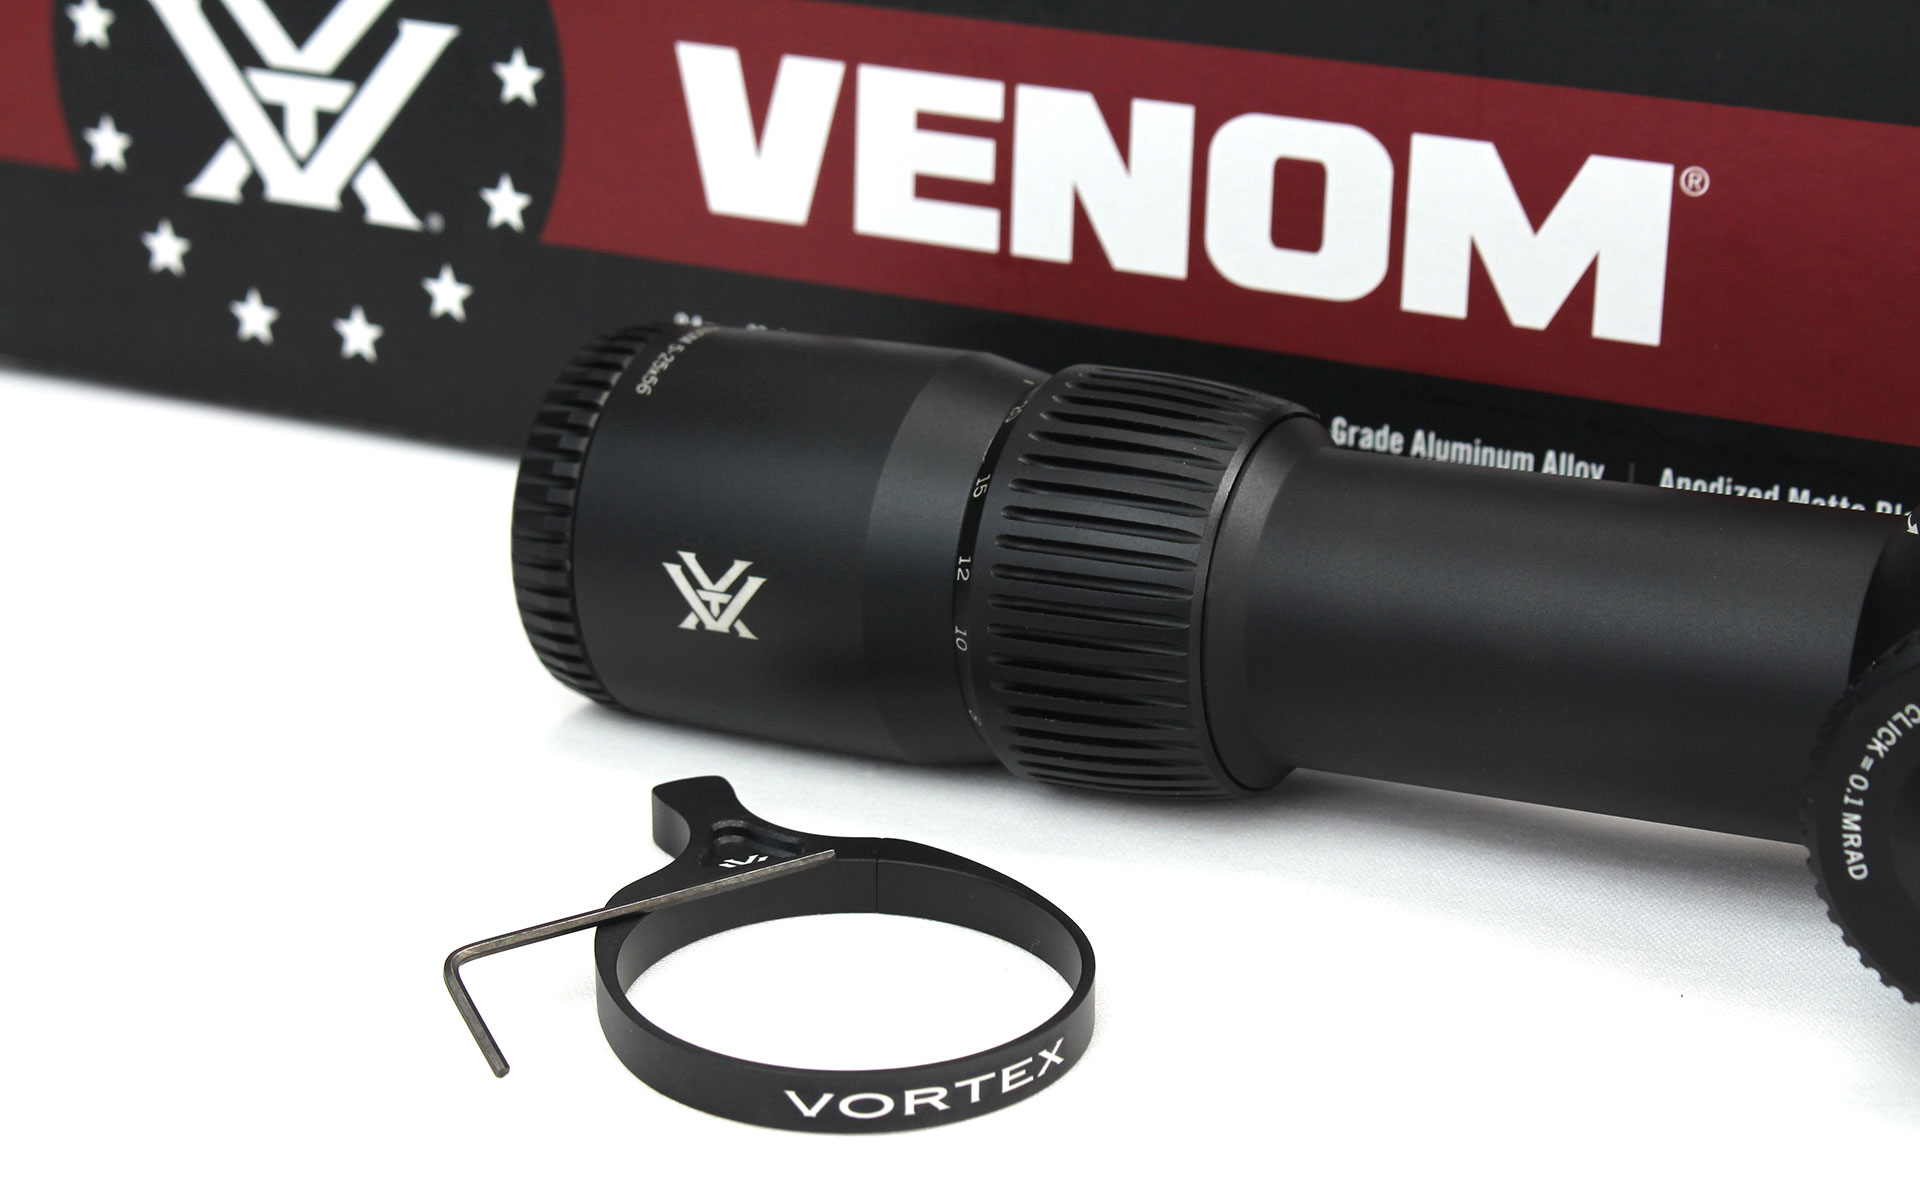 Review: Vortex Venom 5-25X Scope